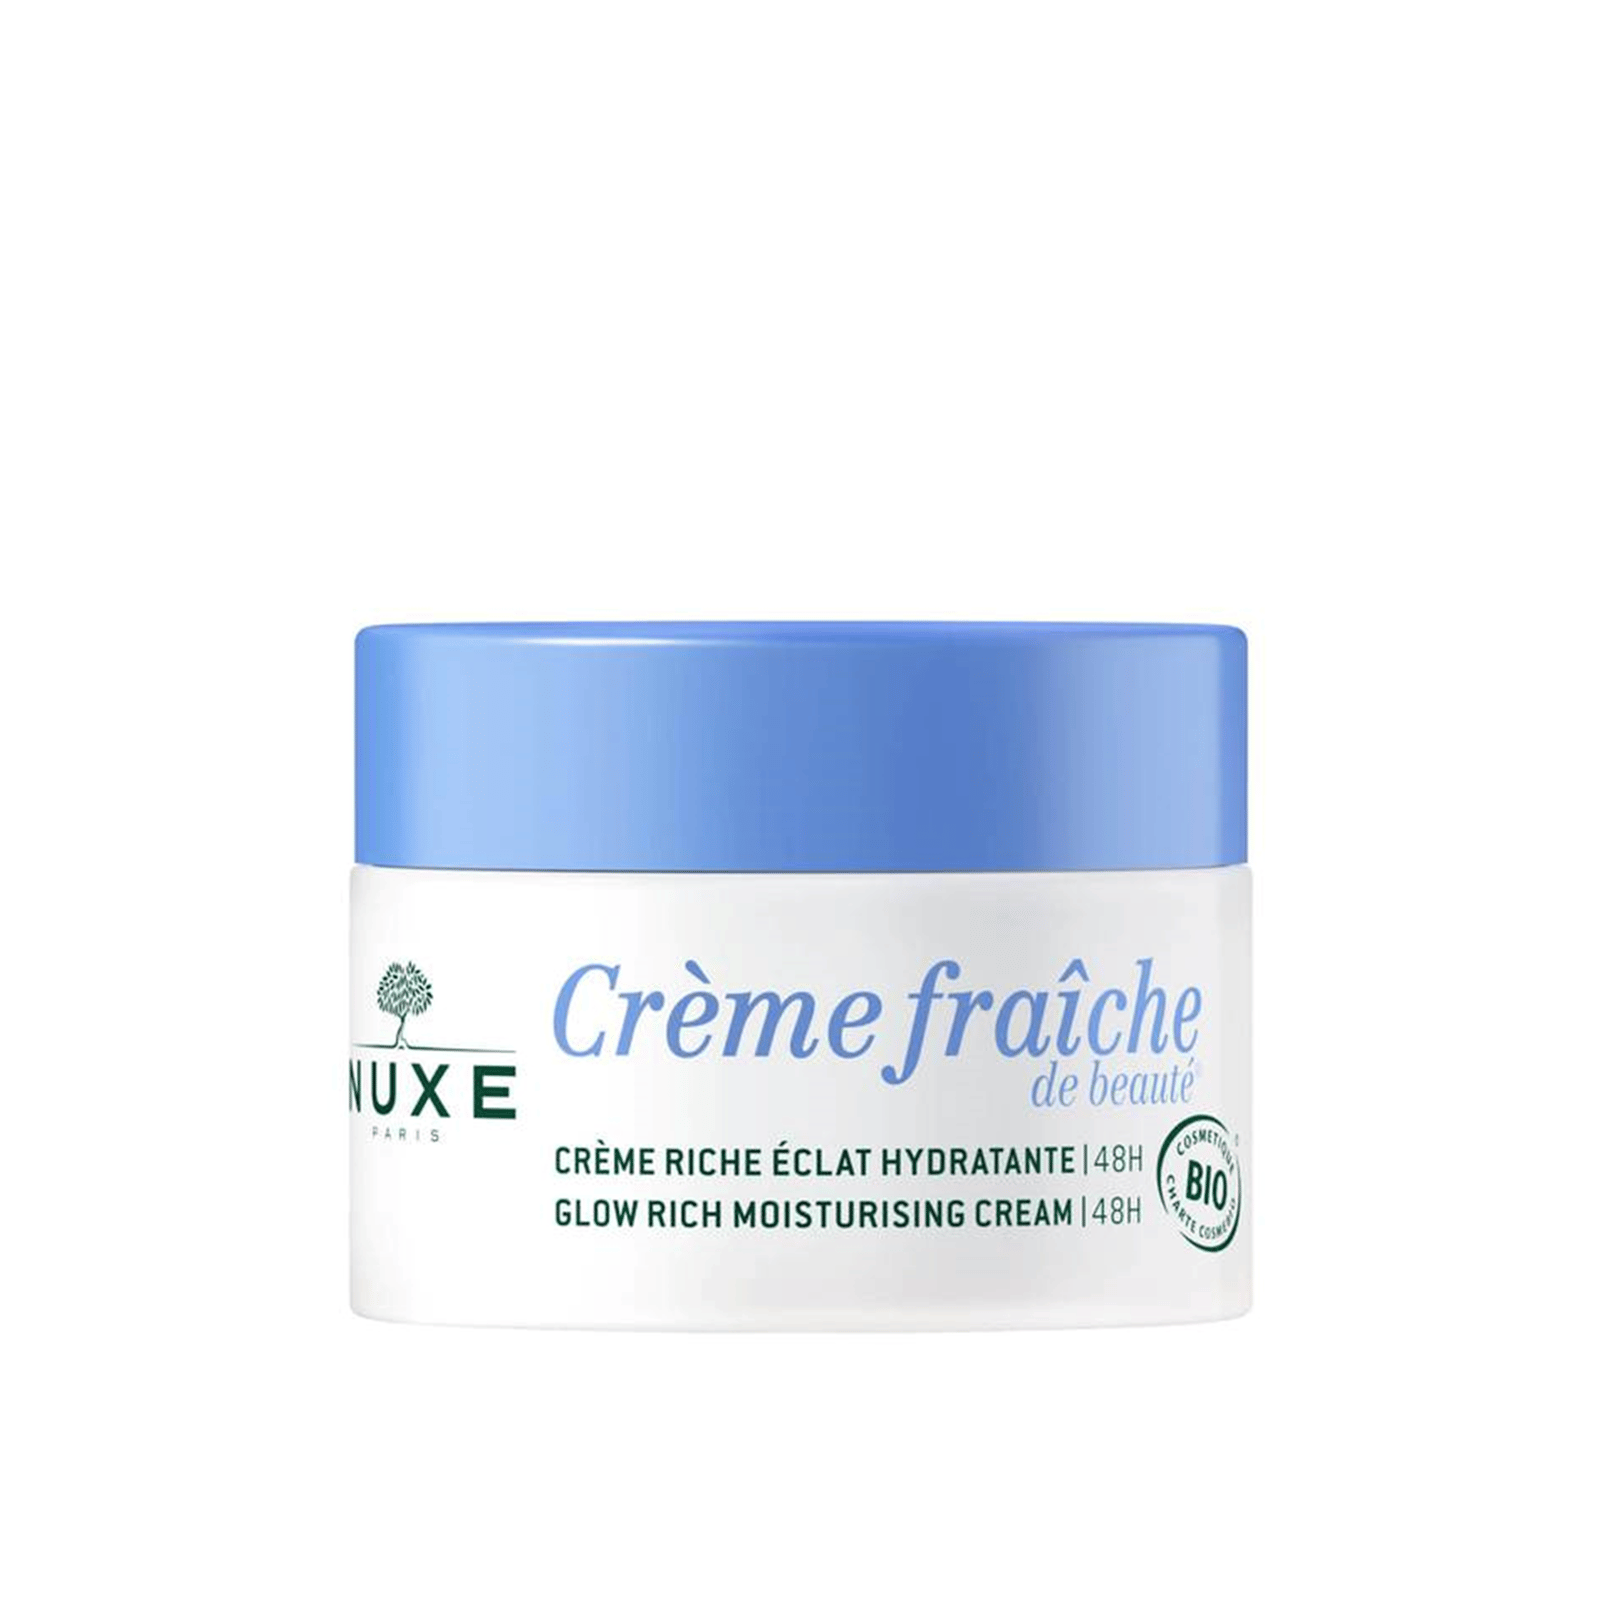 NUXE Crème Fraîche Glow Rich Moisturizing Cream 50ml (1.7 oz)